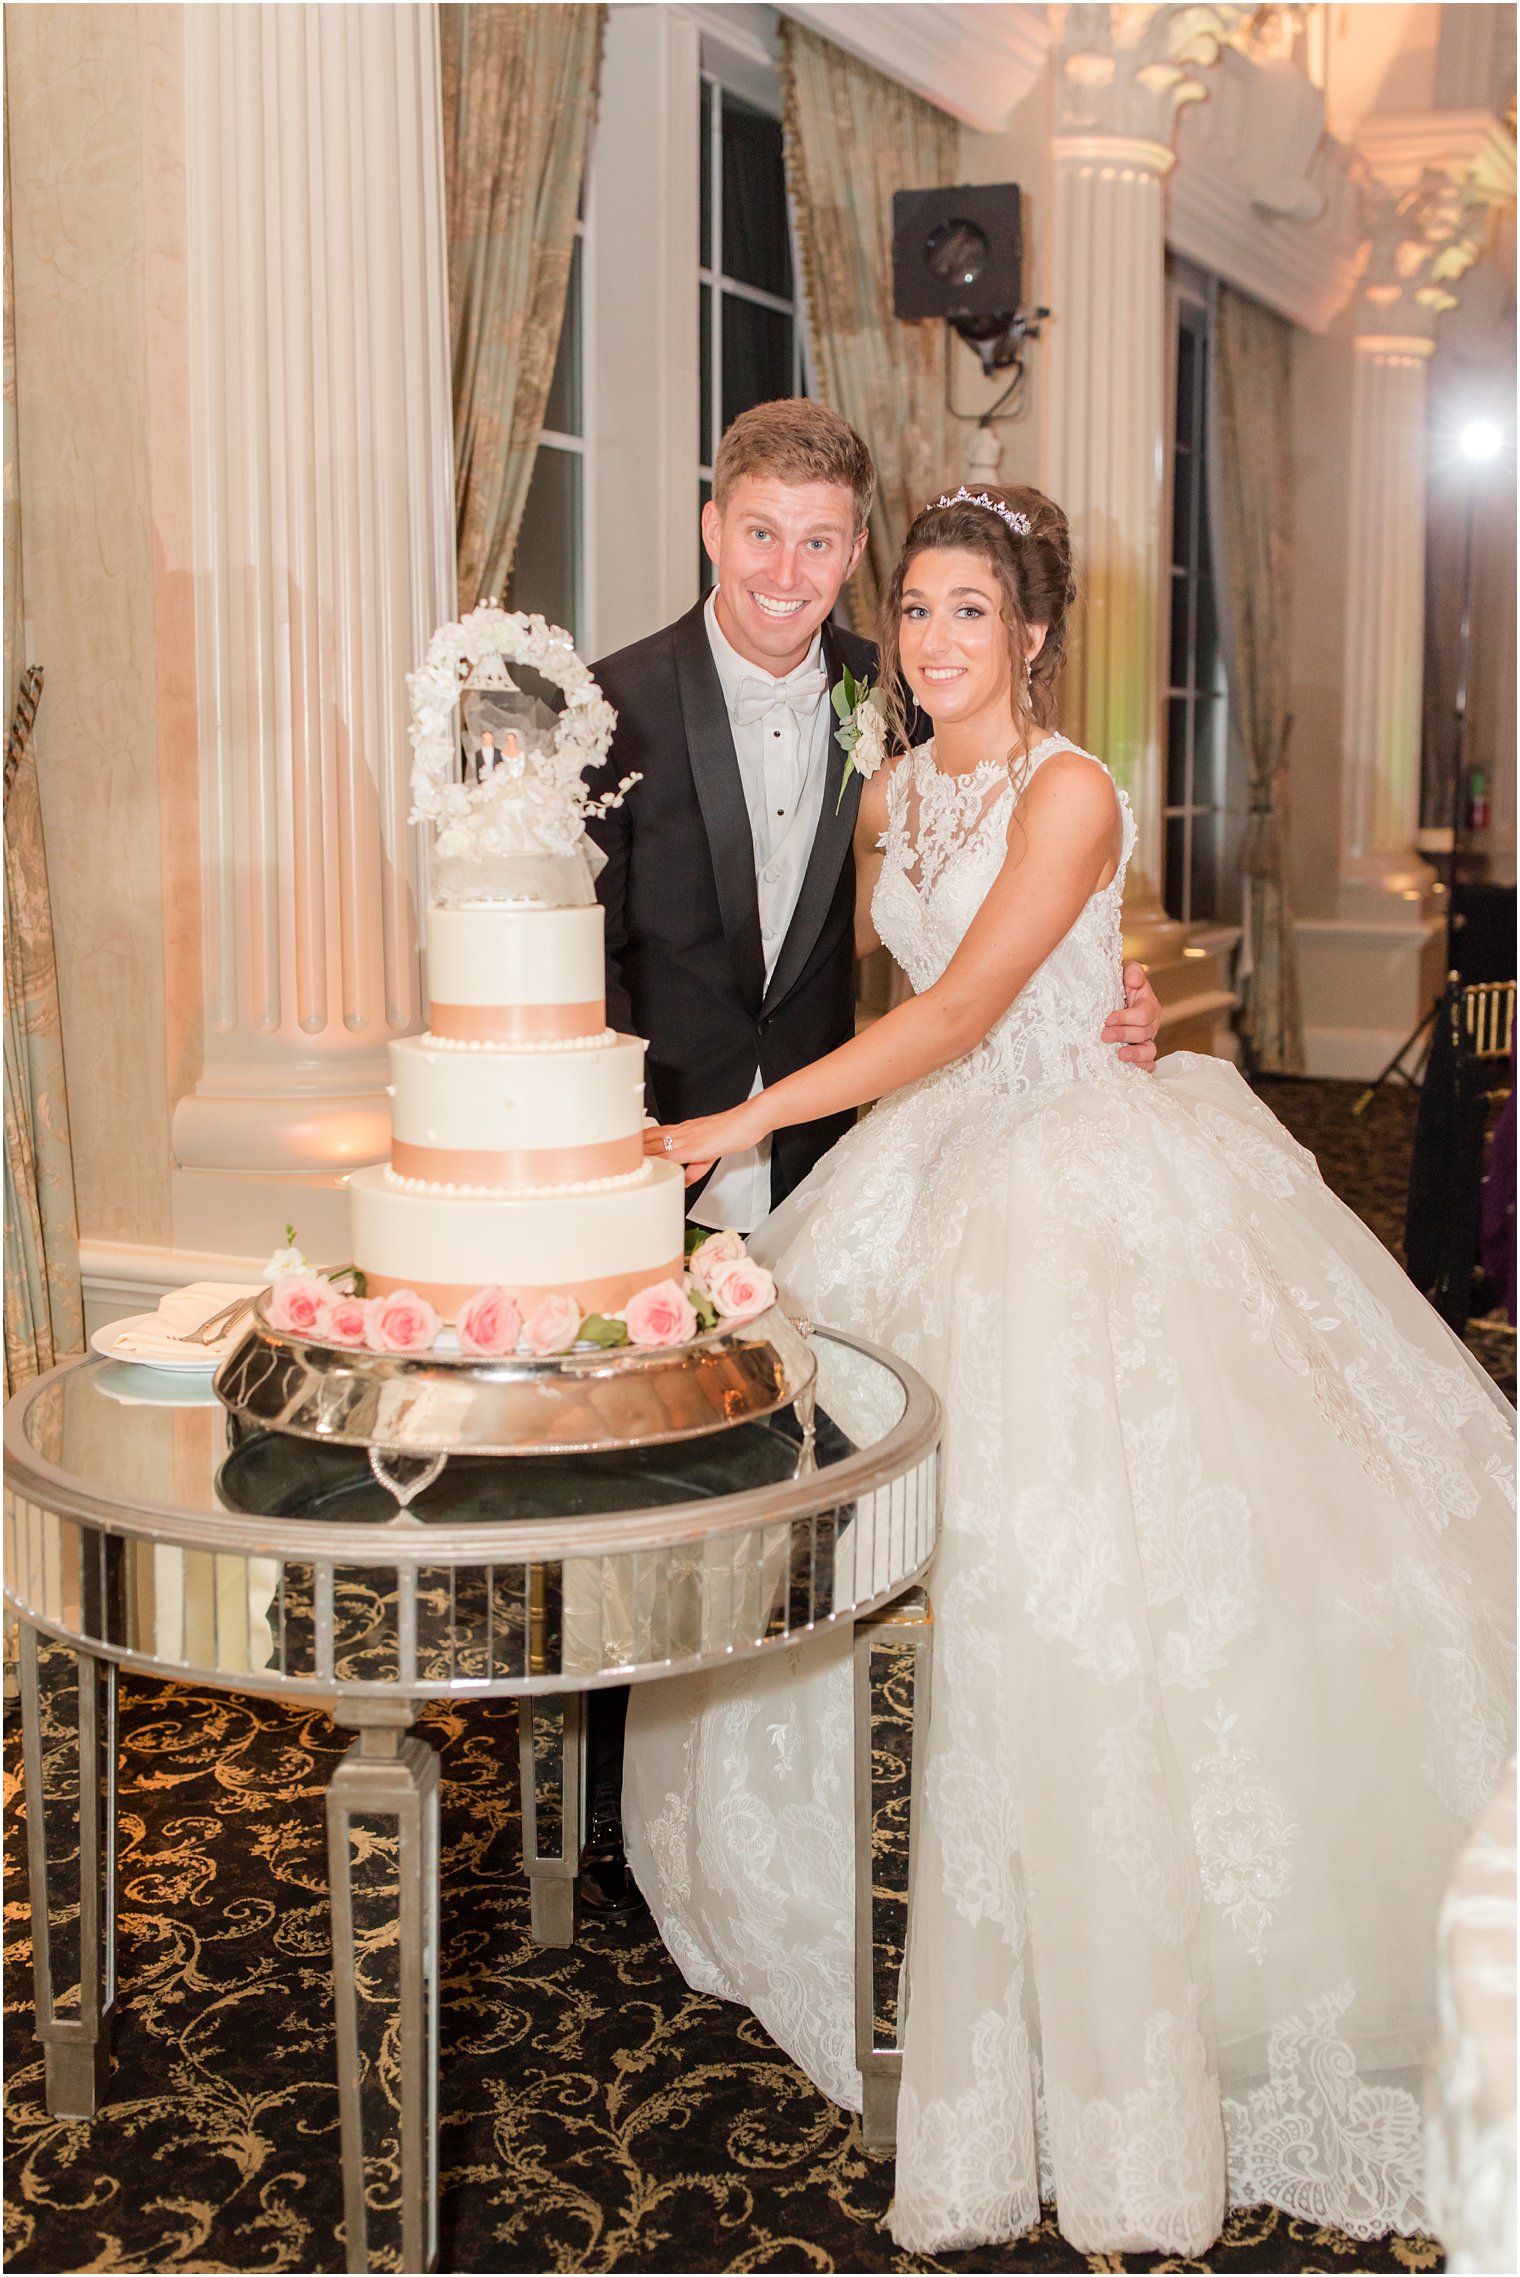 bride and groom cut wedding cake during Allentown NJ wedding reception